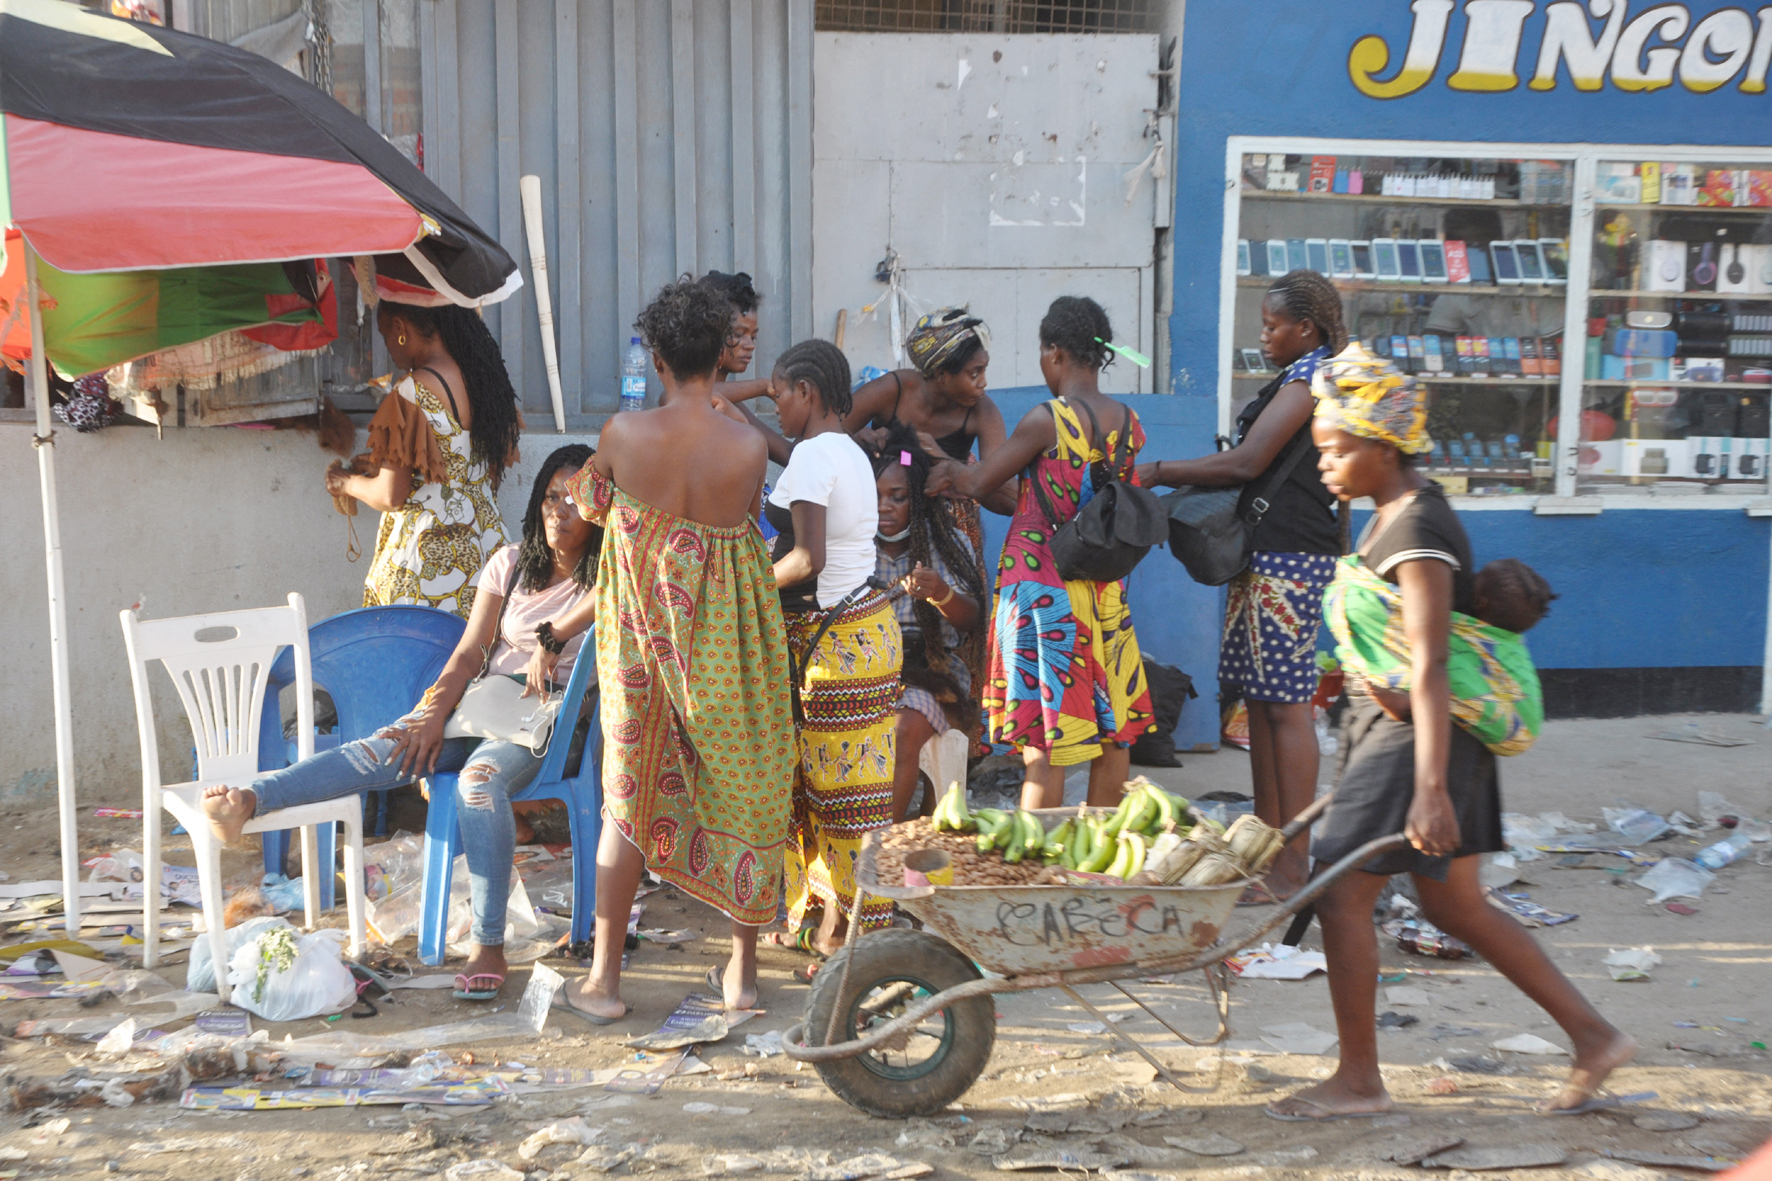 A street vendow pushes a wheelbarrow in Luanda, Angola.